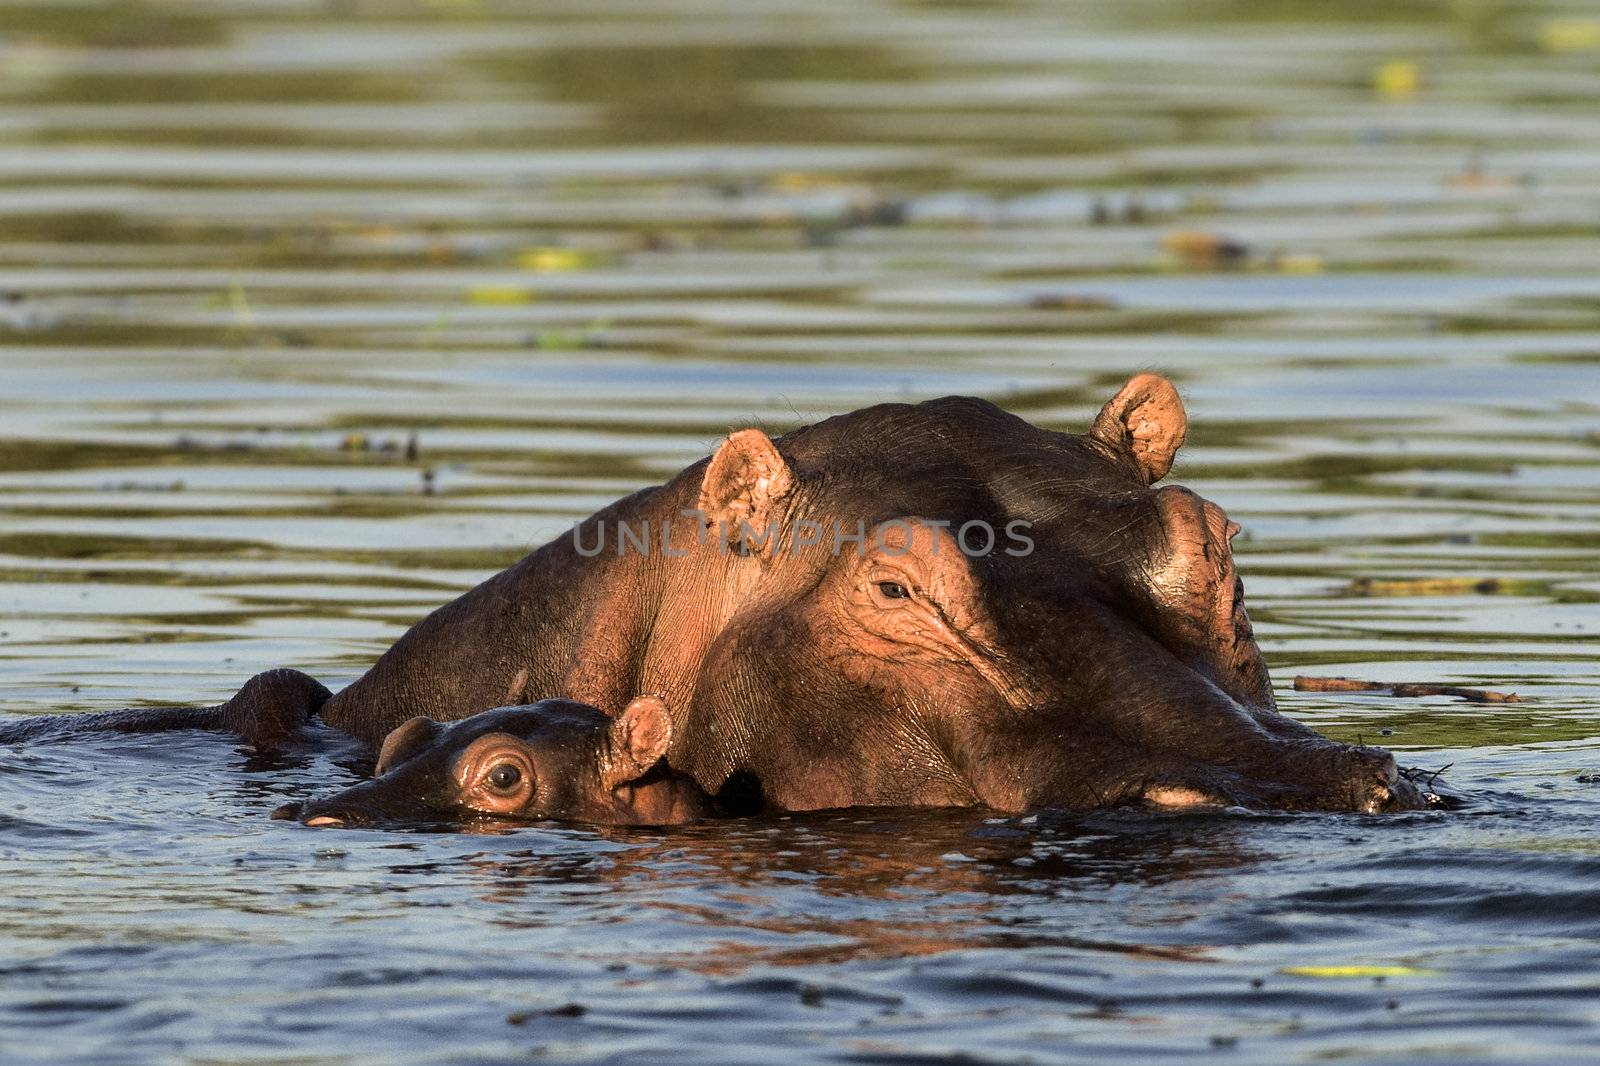 Hippopotamus with baby. by SURZ